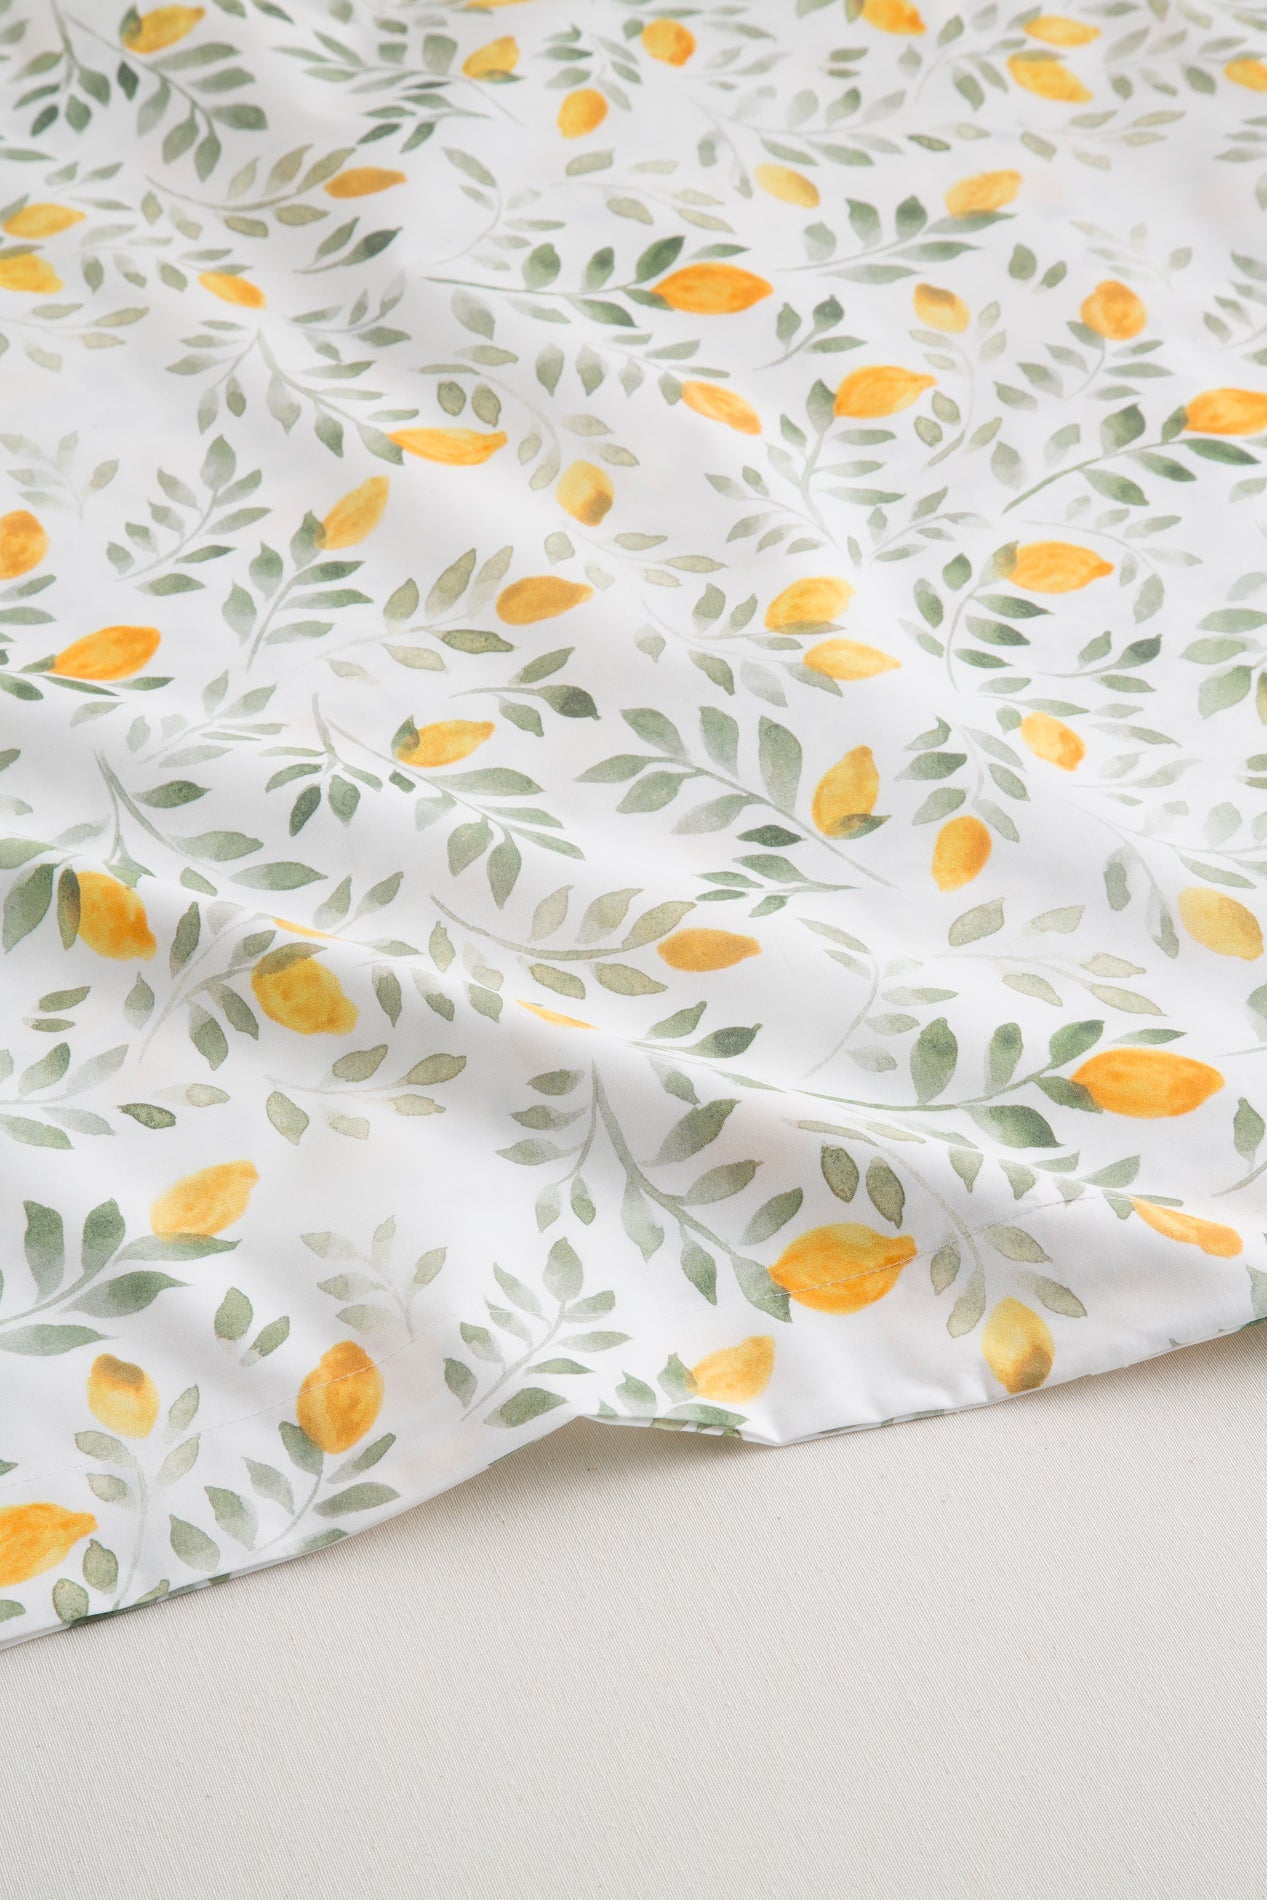 Percale Cotton Top Sheet 200h Bed 135 - Lemons